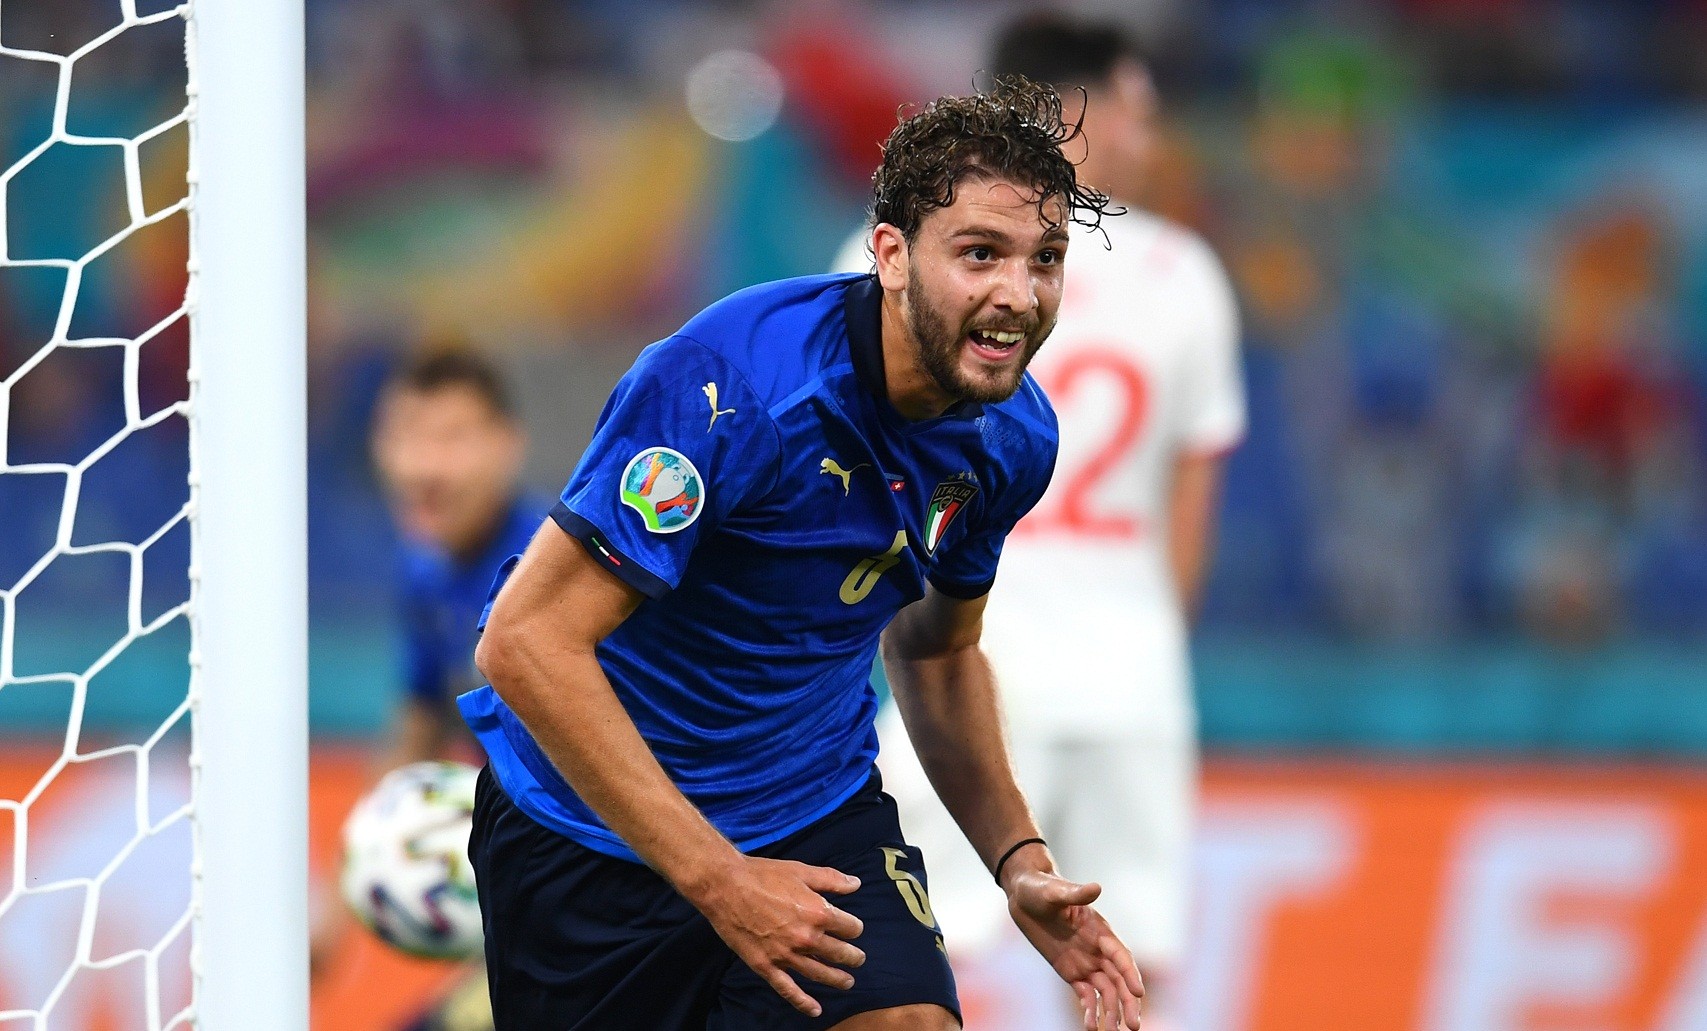 Kebahagiaan Manuel Locatelli usai mencetak gol pertama Italia ke gawang Swiss di matchday 2 Grup A Euro 2020, Kamis 17 Juni 2021 di Stadio Olimpico, Roma. (Foto: Twitter/@EURO2020)